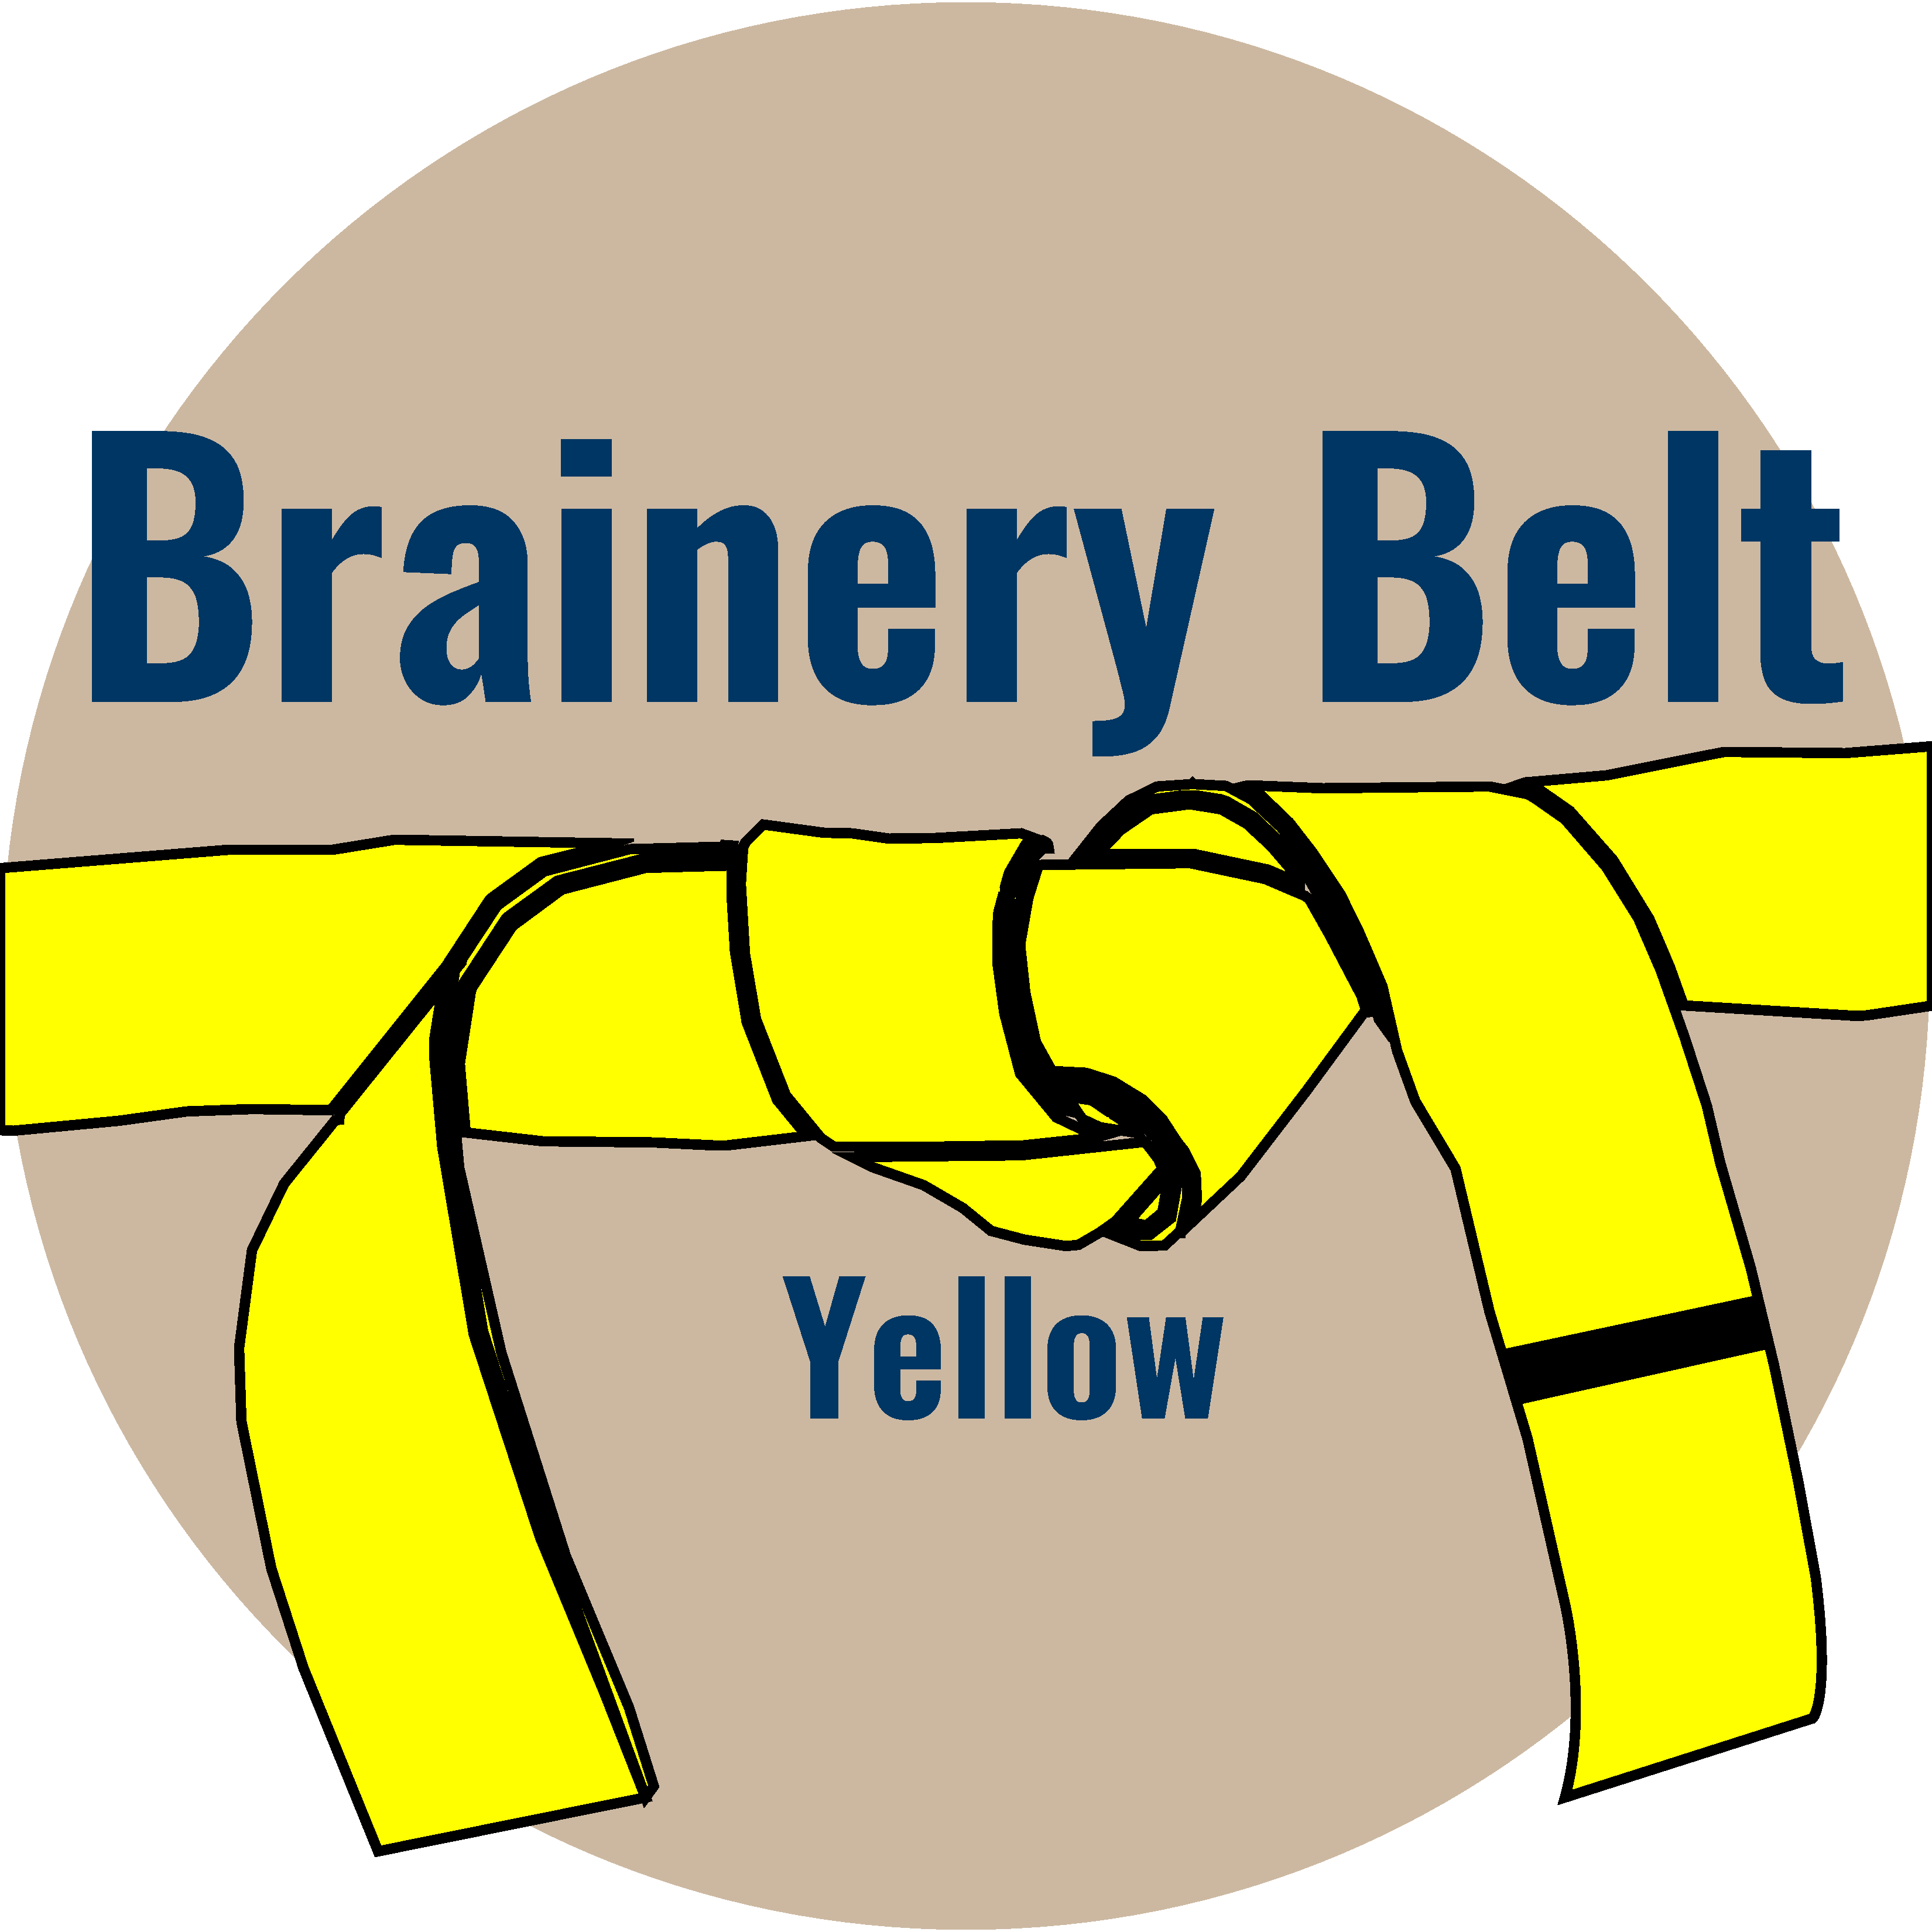 UC2 Brainery Yellow Belt I